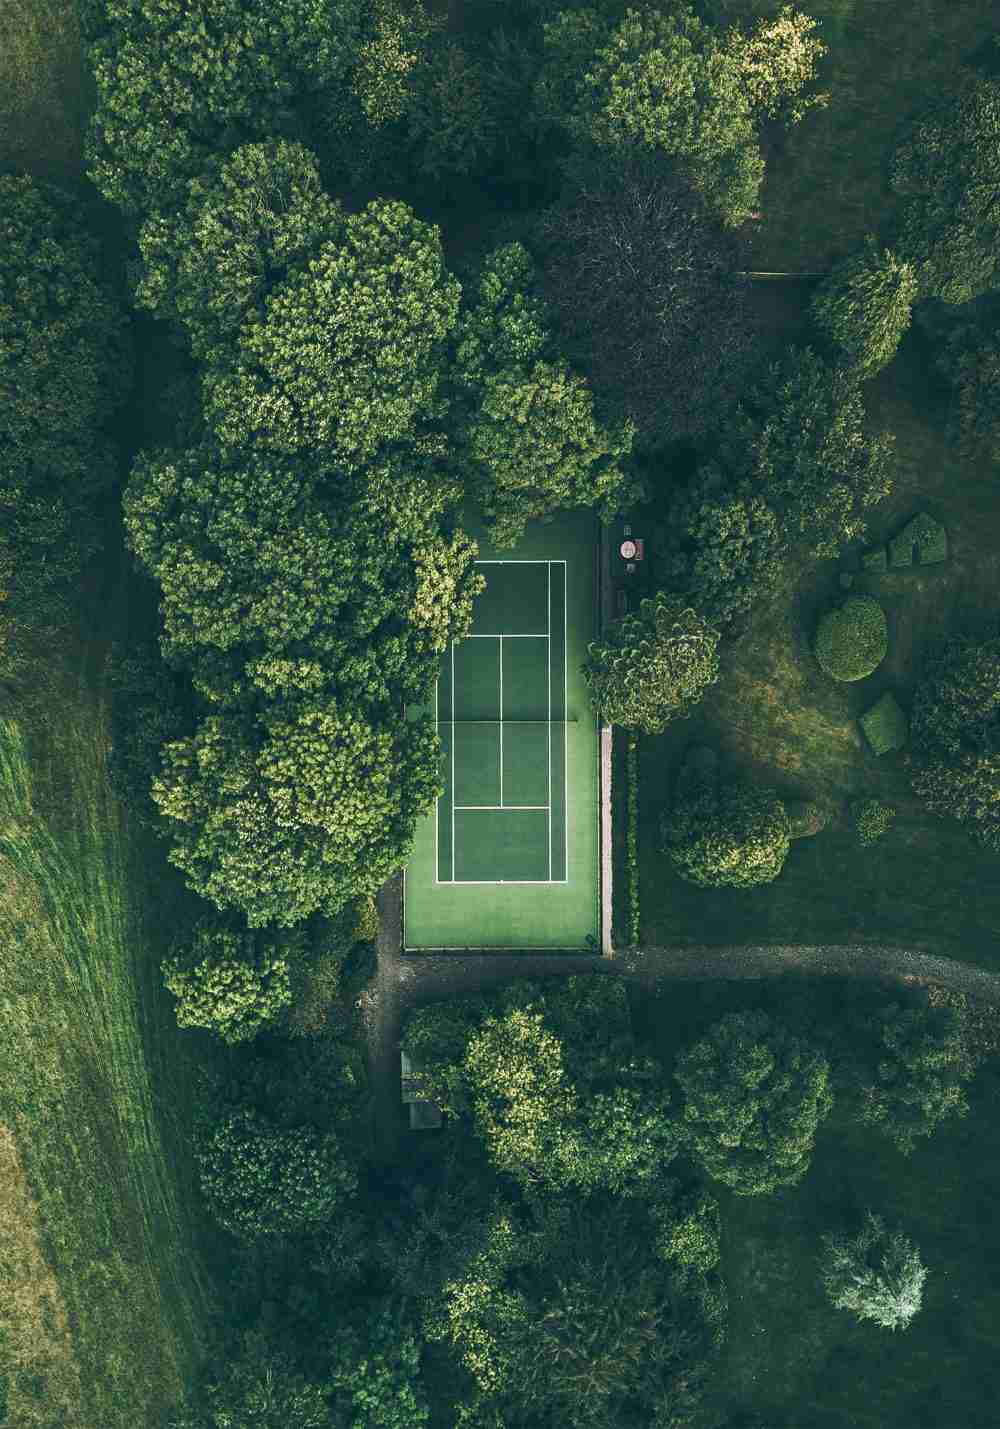 Tennisbana i Skogen Poster